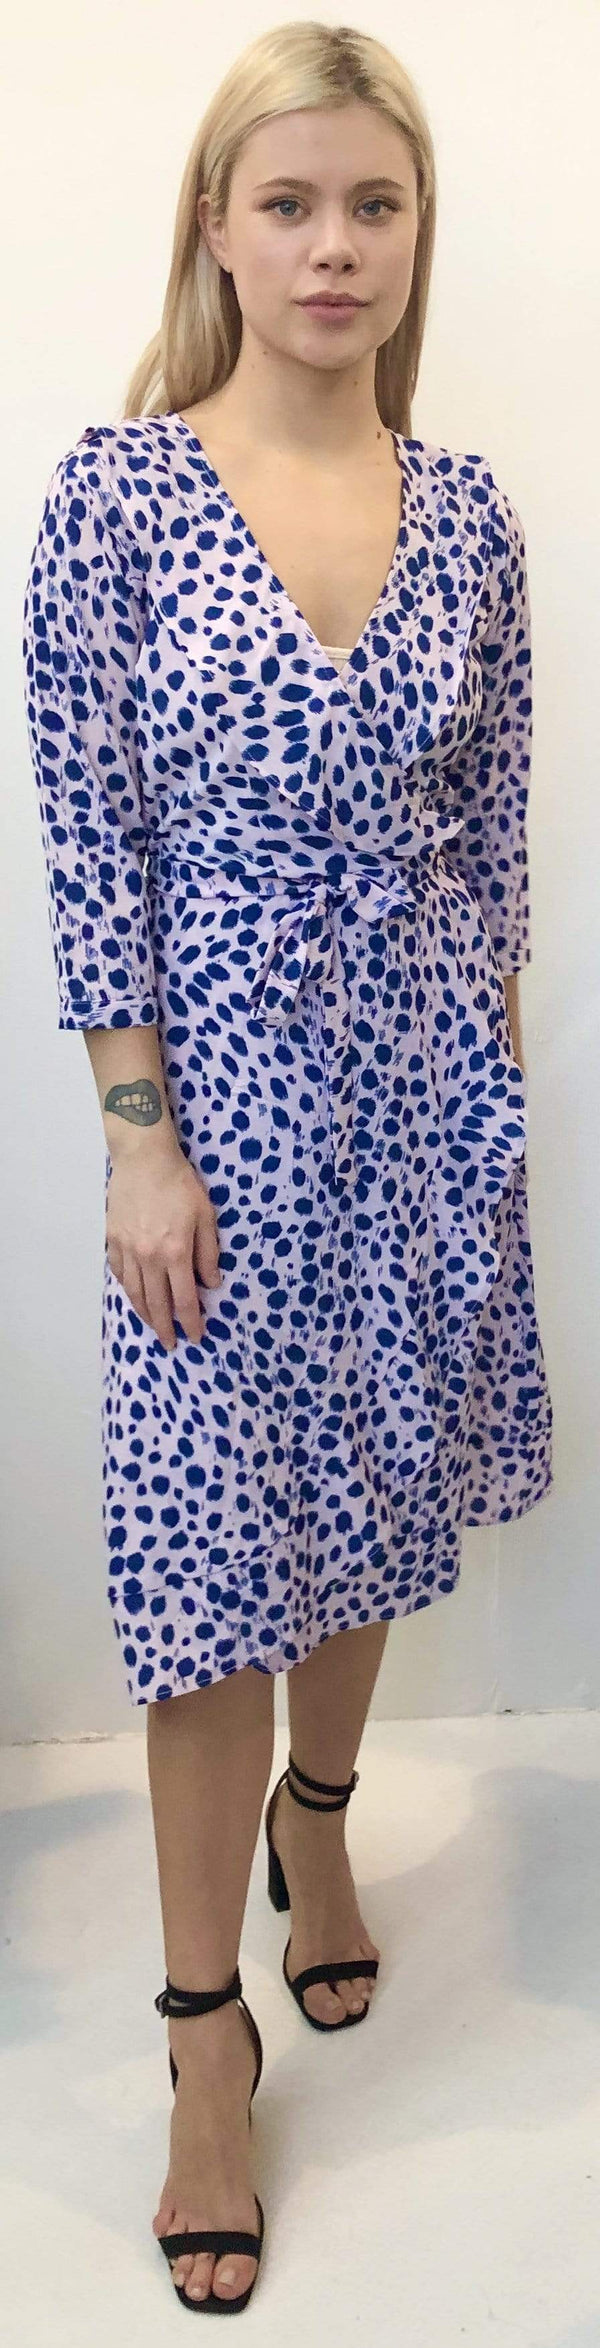 The Flirty Wrap Dress Midi - Hamptons Weekend dubai outfit dress brunch fashion mums